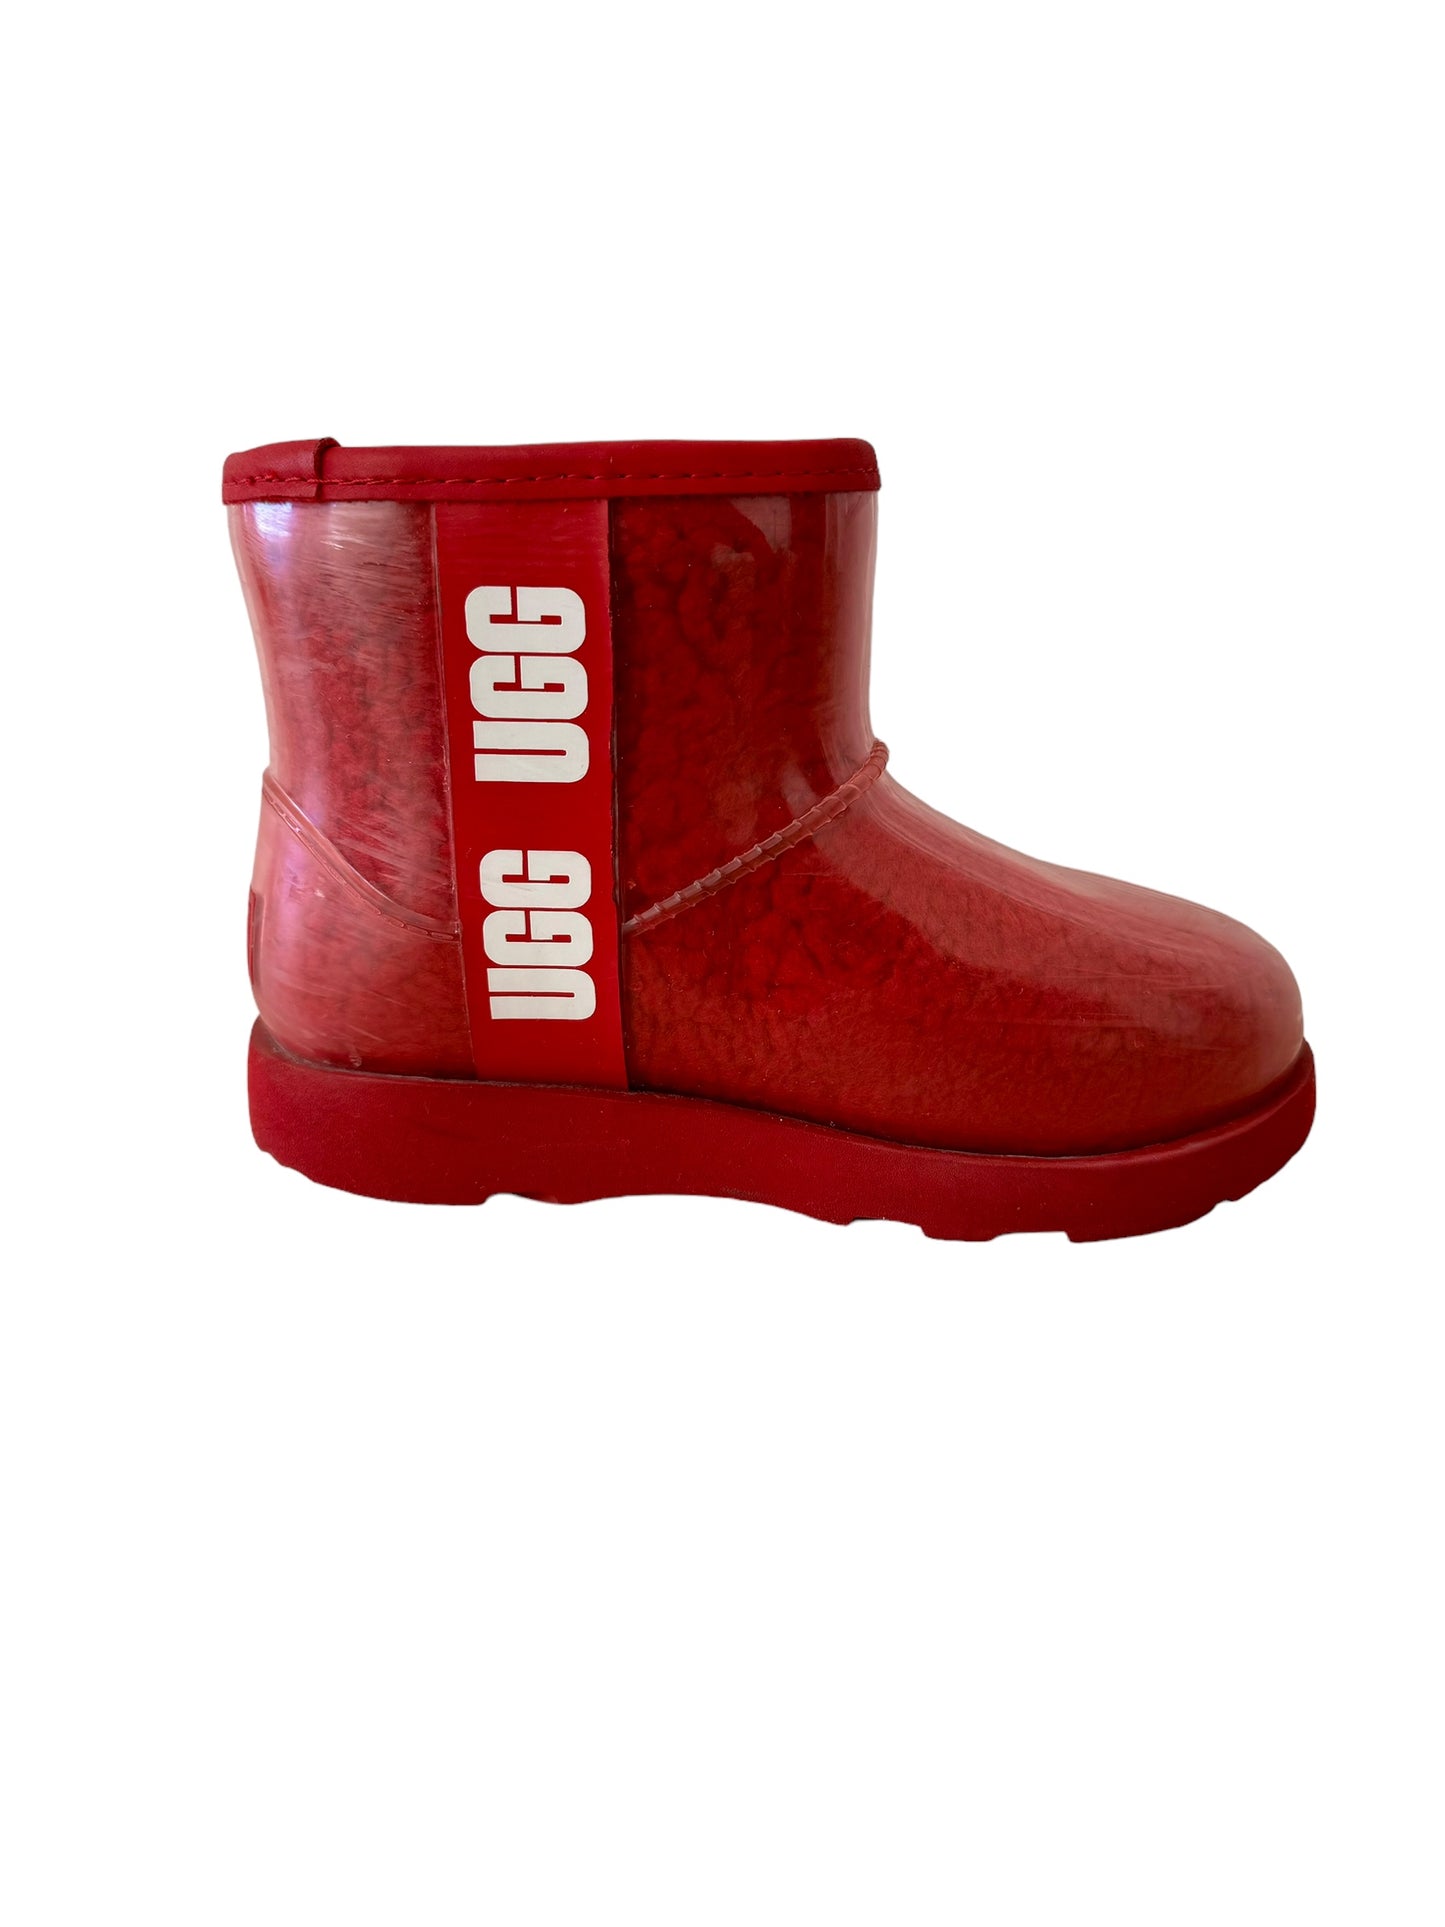 UGG Kids Unisex Mini Clear Shearling Waterproof Winter Red Boots Sz 12US